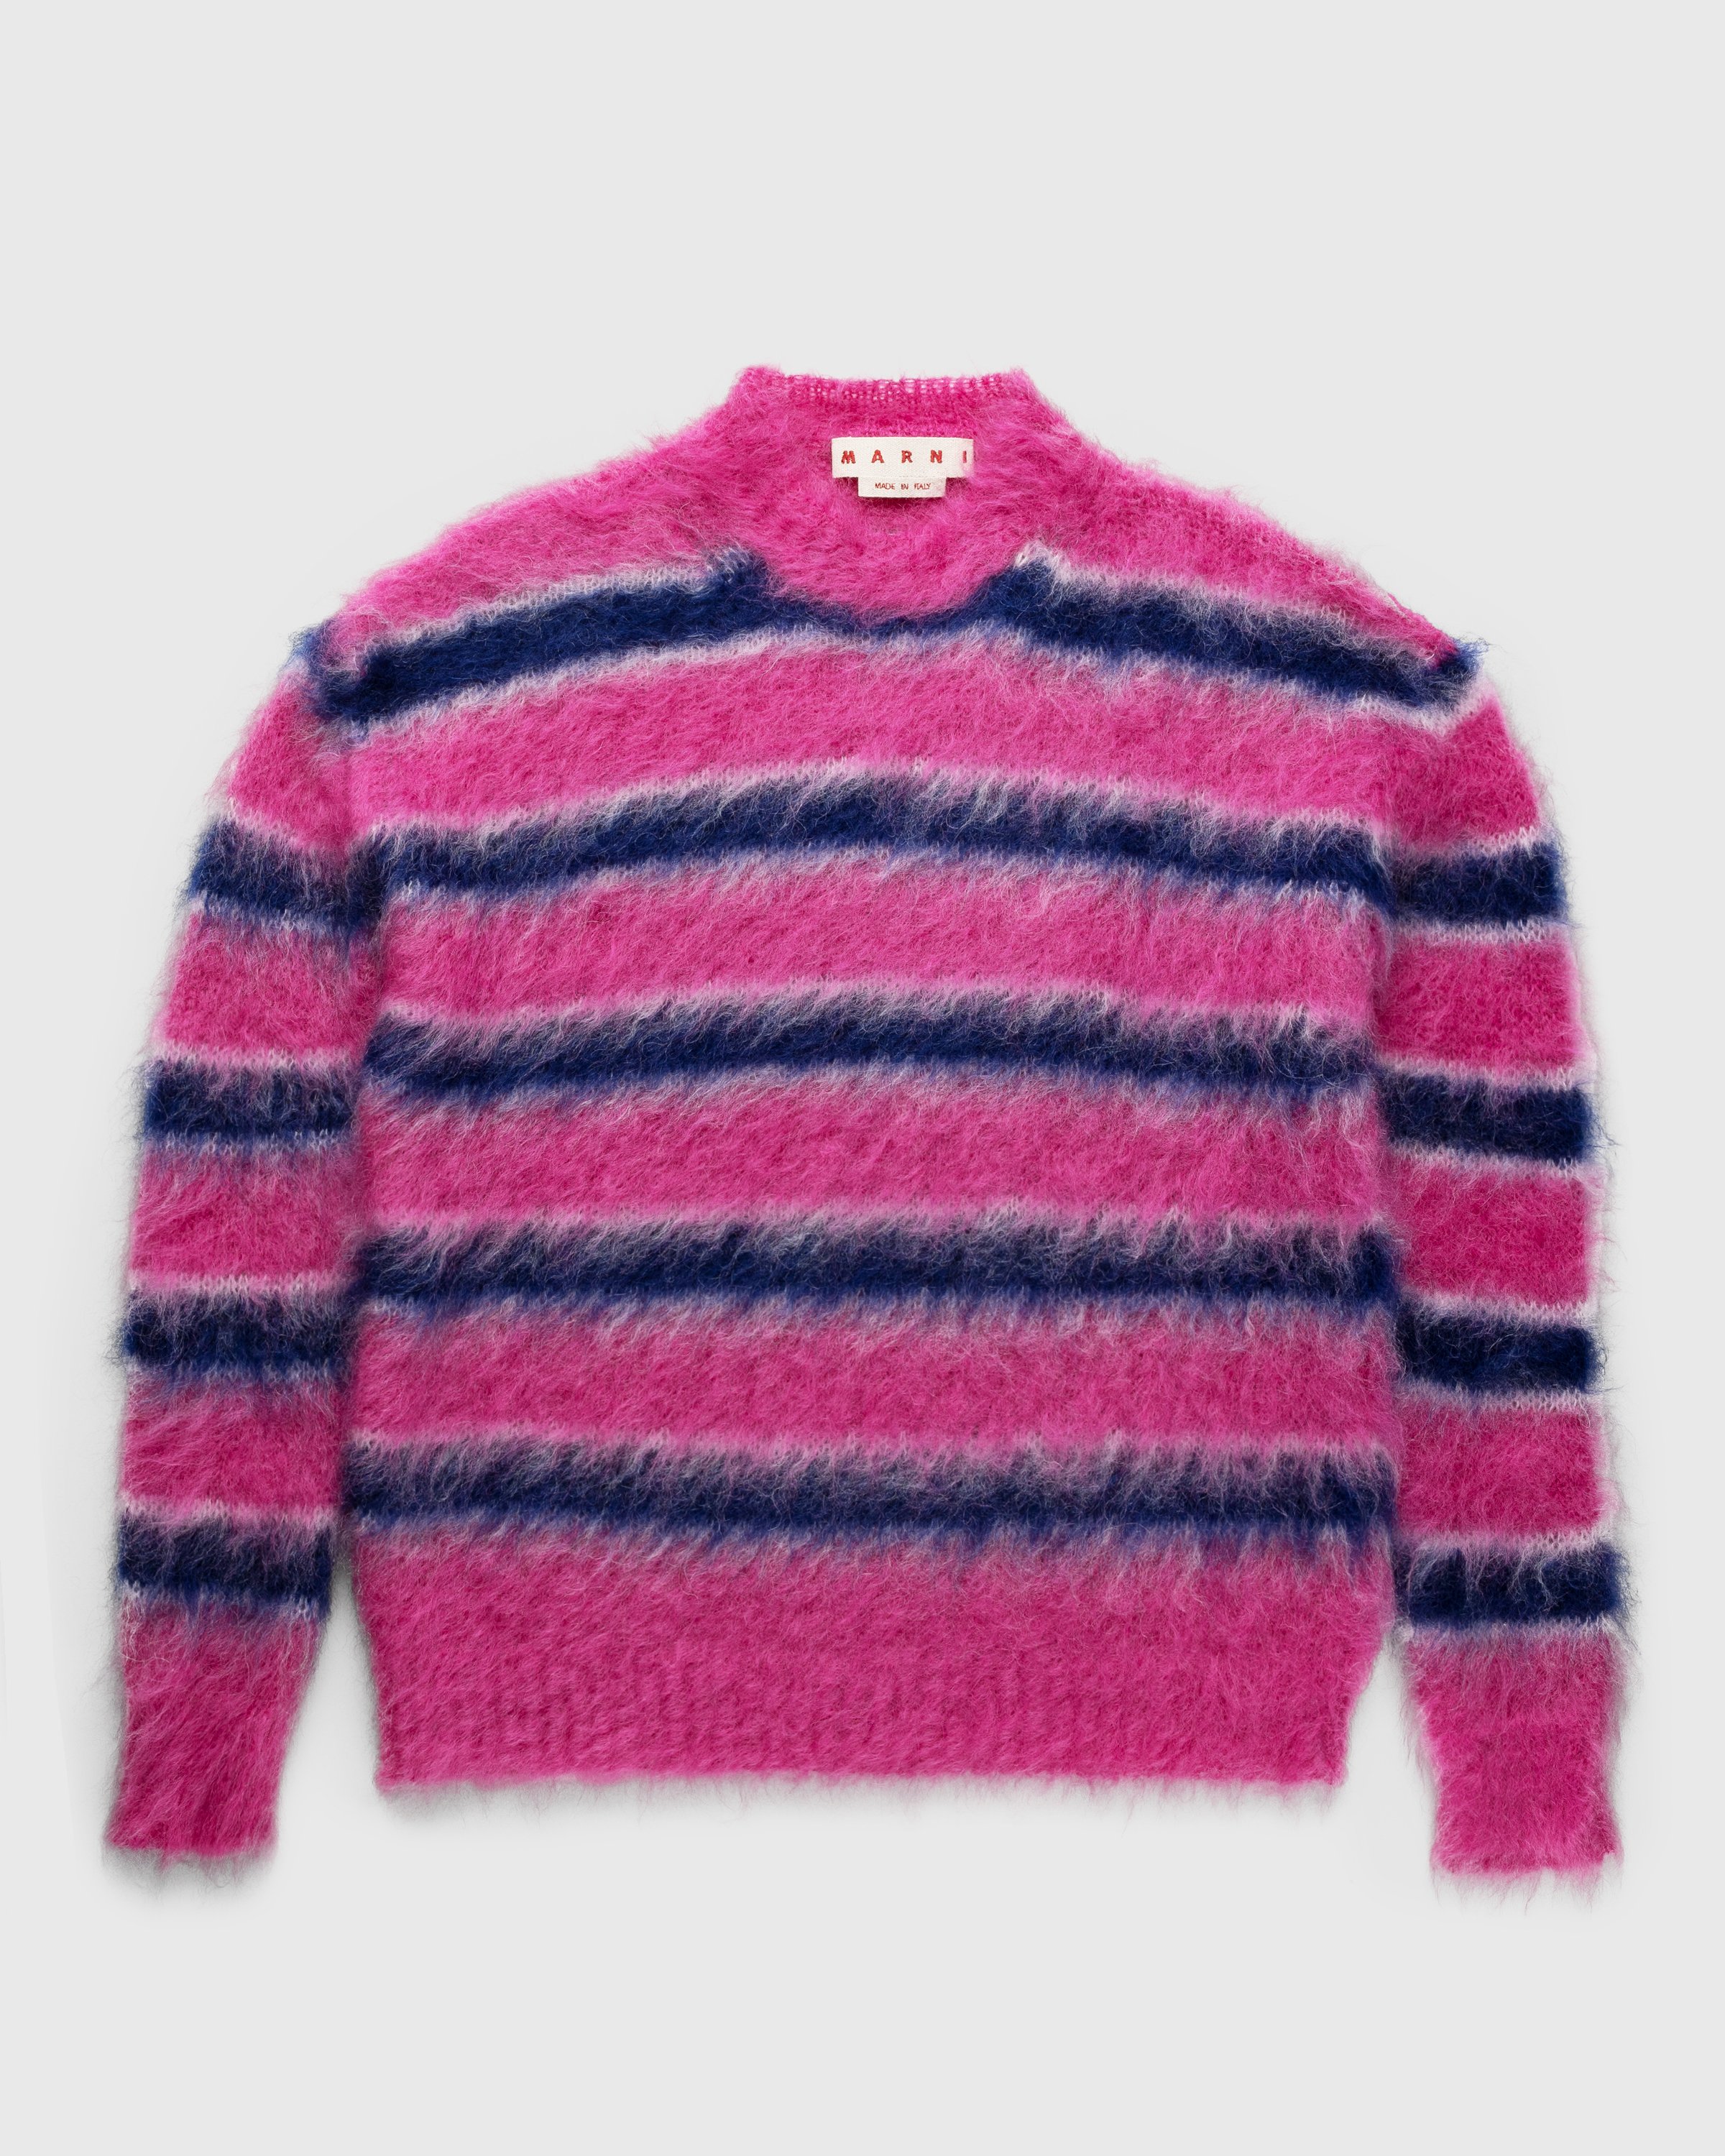 Marni - Striped Mohair Sweater Multi - Clothing - Multi - Image 1